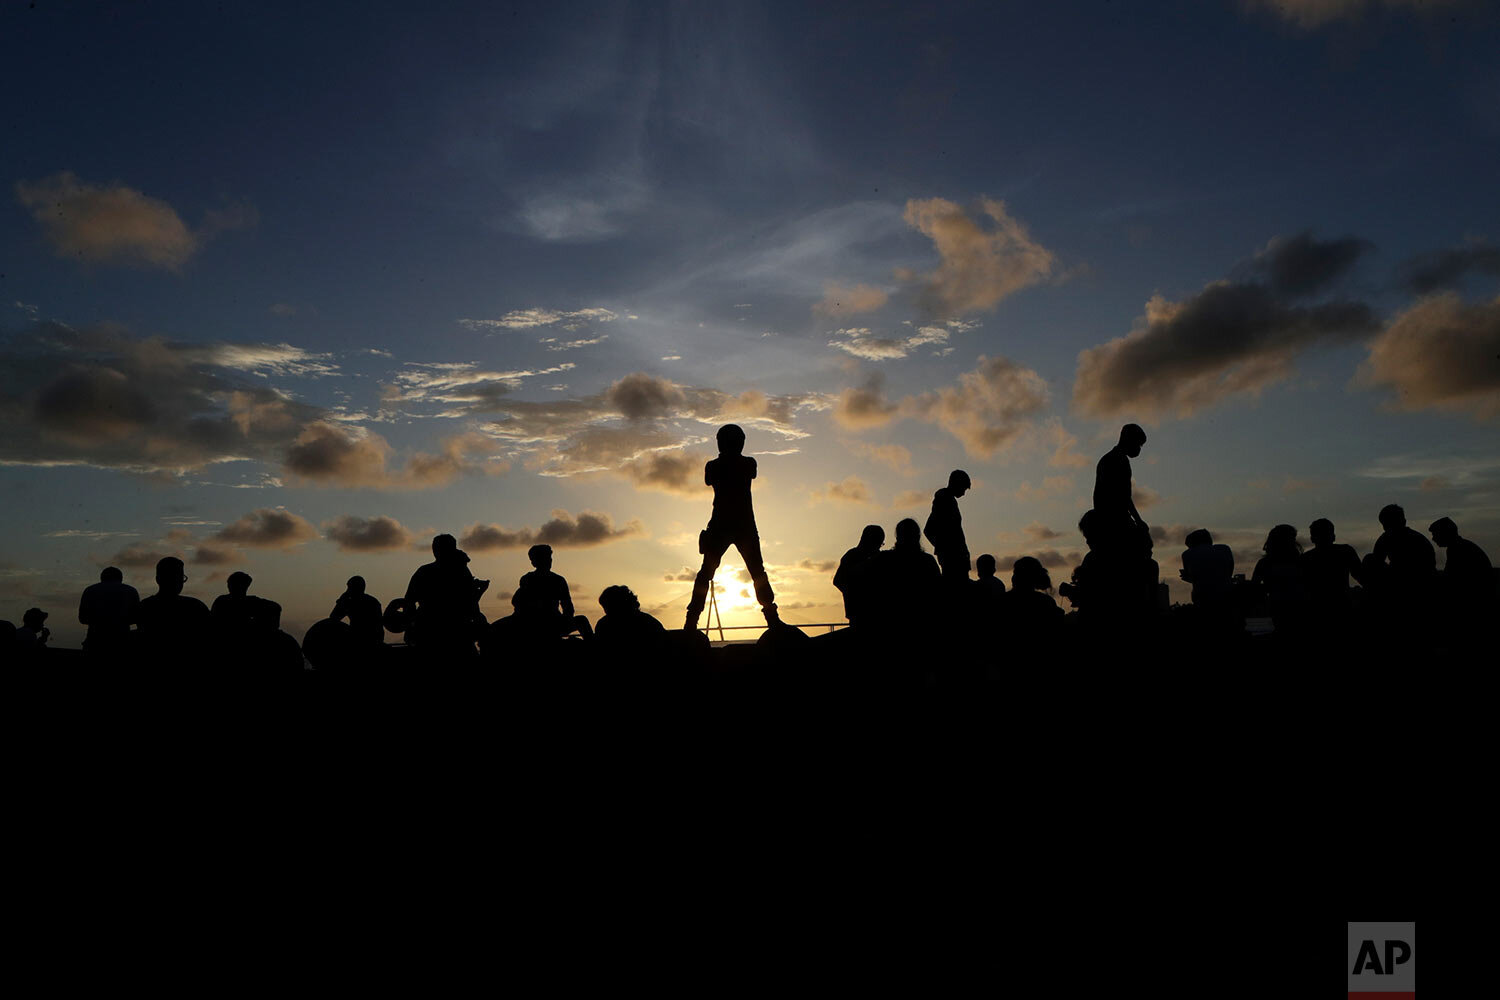  People gather at a sea front in the evening in Mumbai, India, Sunday, Aug. 2, 2020. (AP Photo/Rajanish Kakade) 